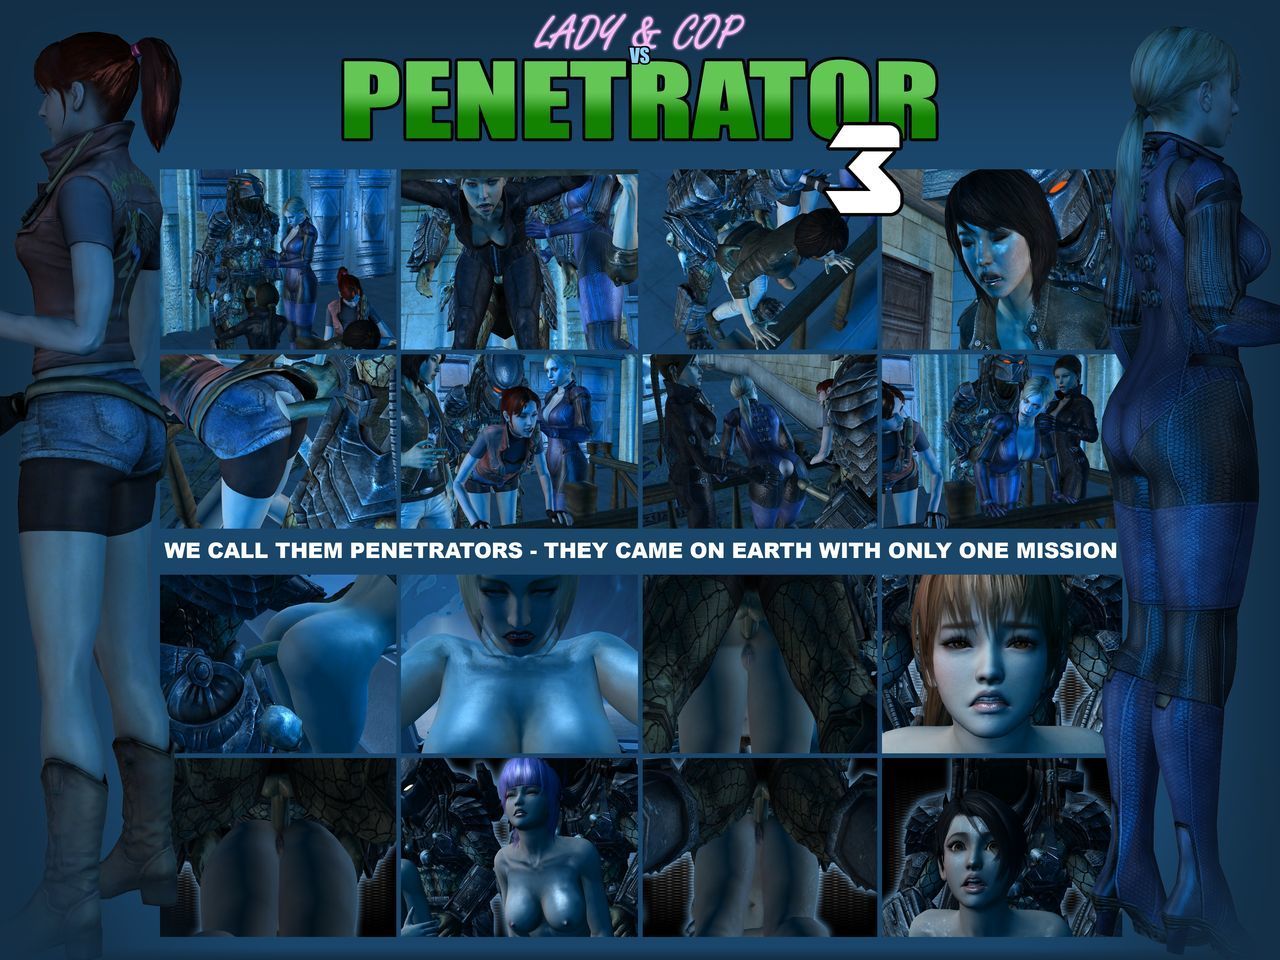 Bayan & Polis vs penetrator 3 (preview)